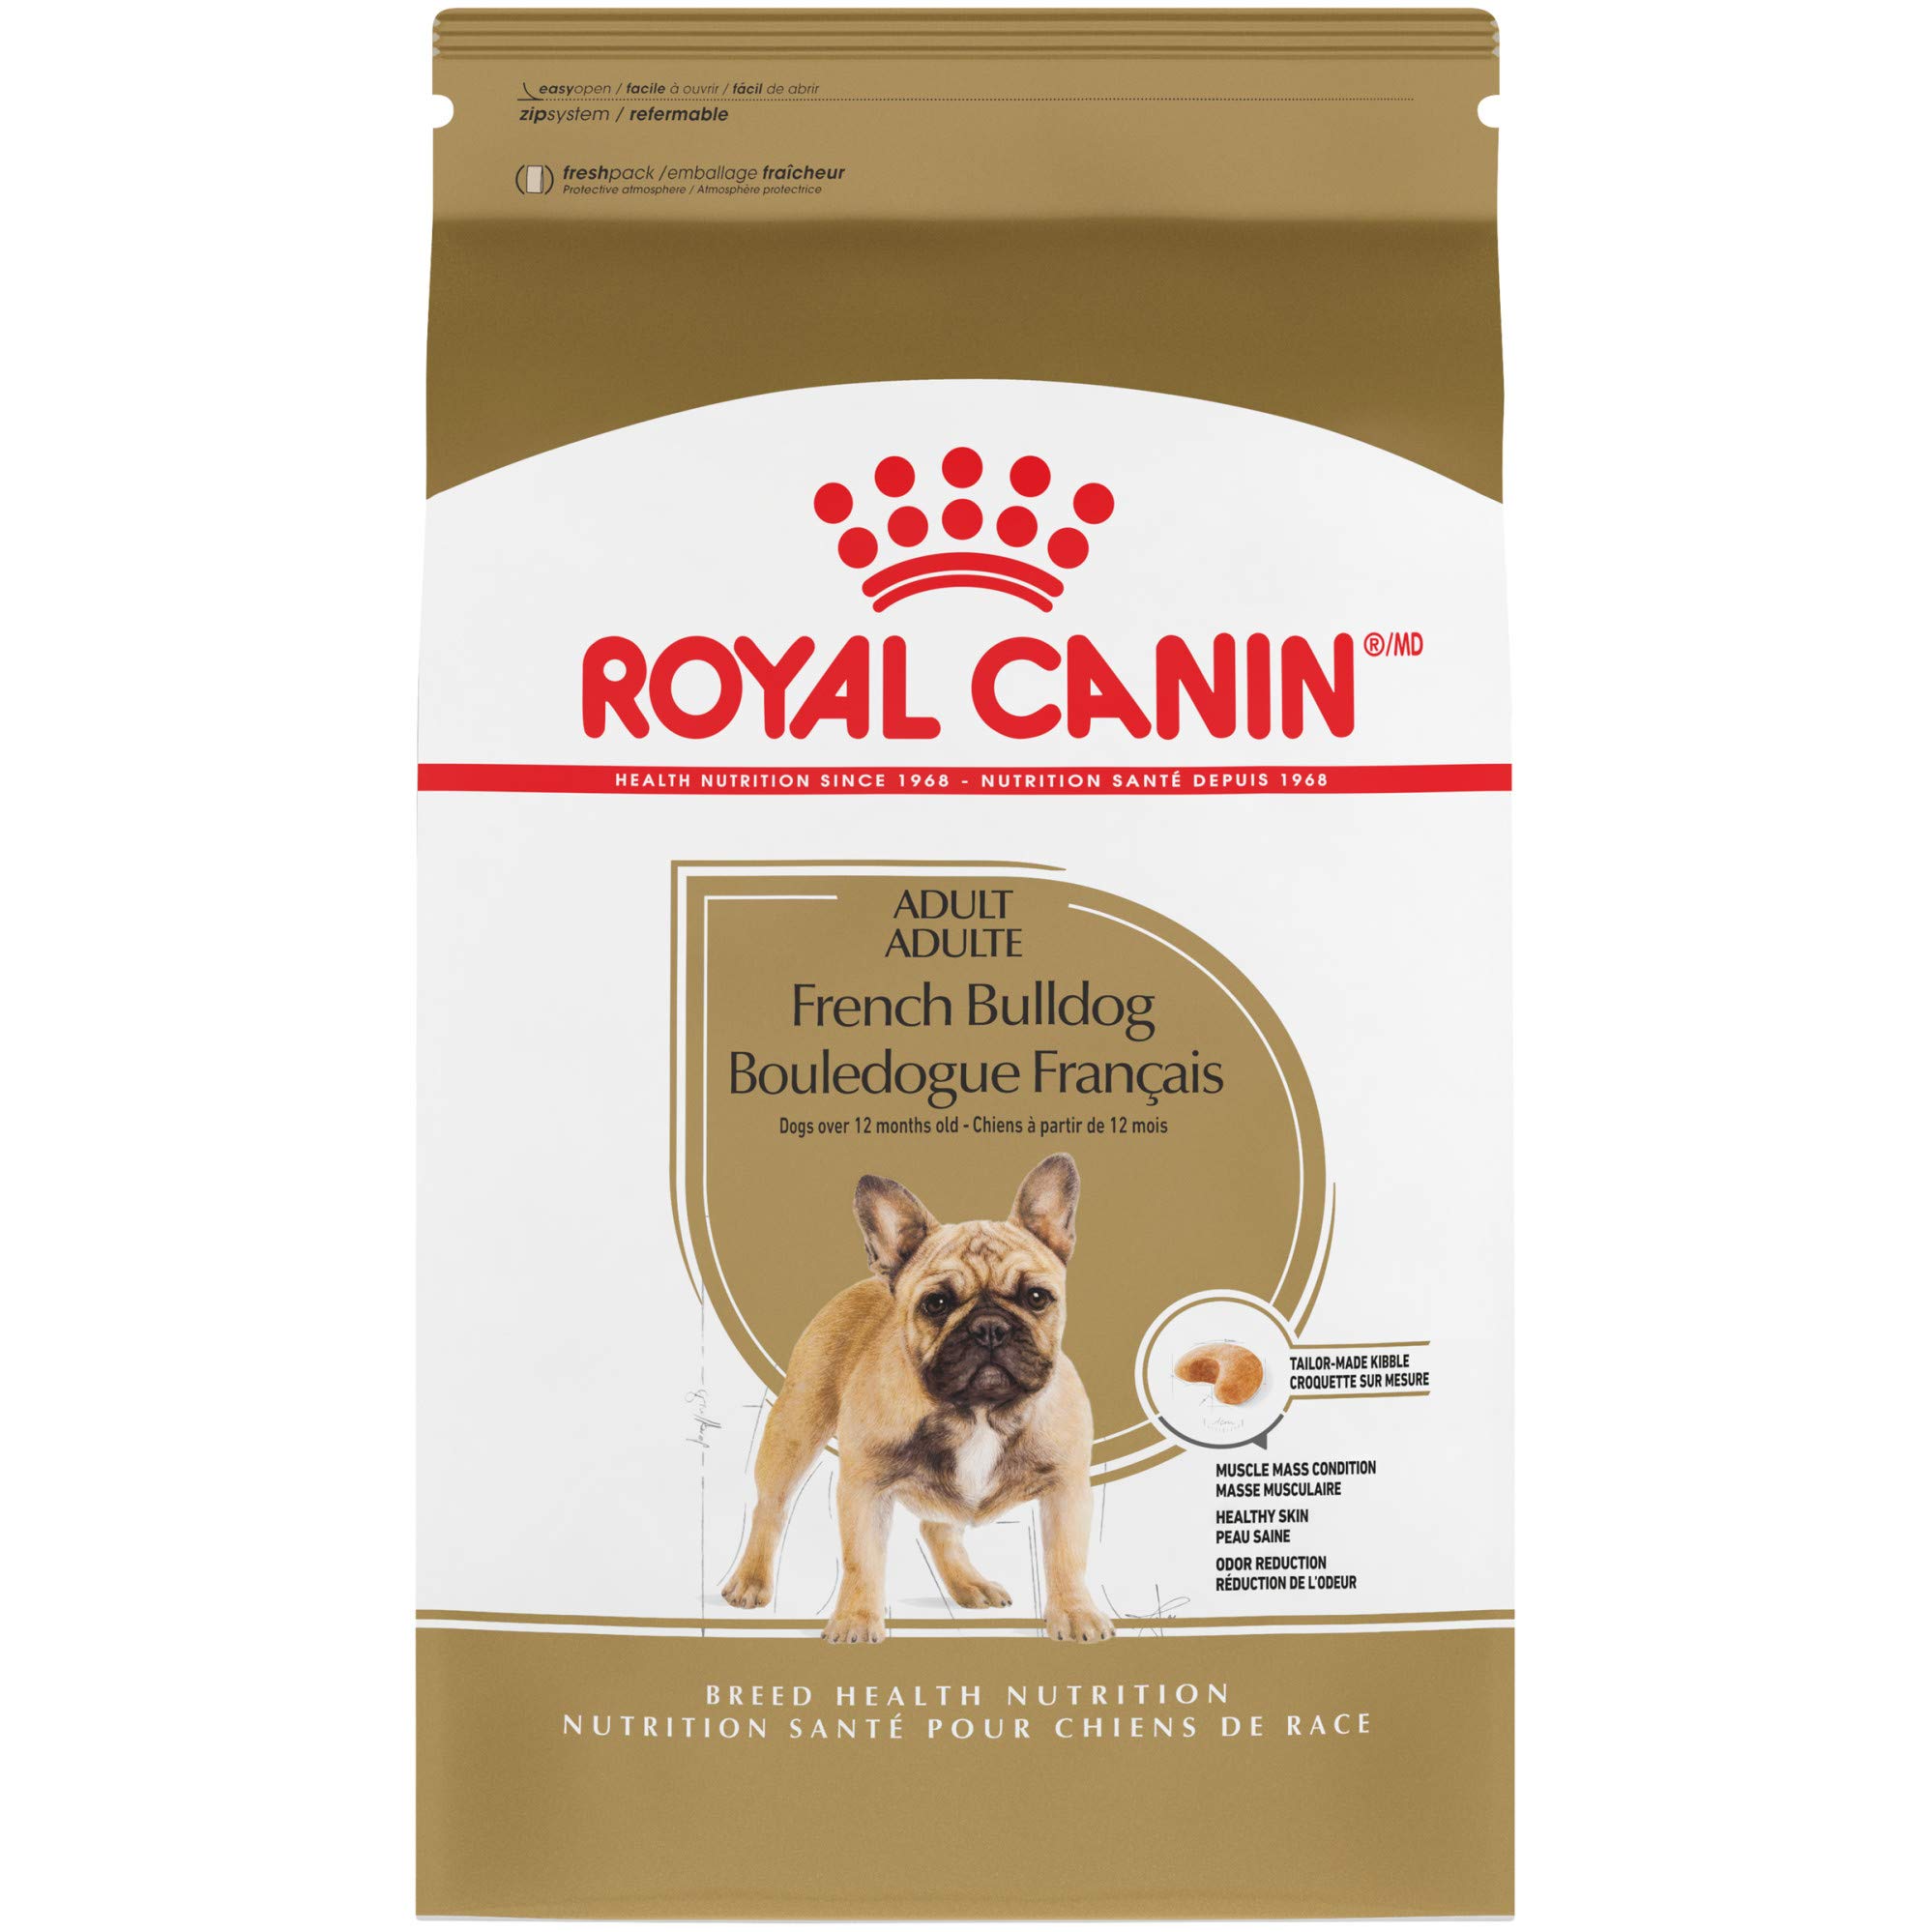 Royal Canin 品種の健康栄養フレンチ ブルドッグ成犬ドライ ドッグ フード...